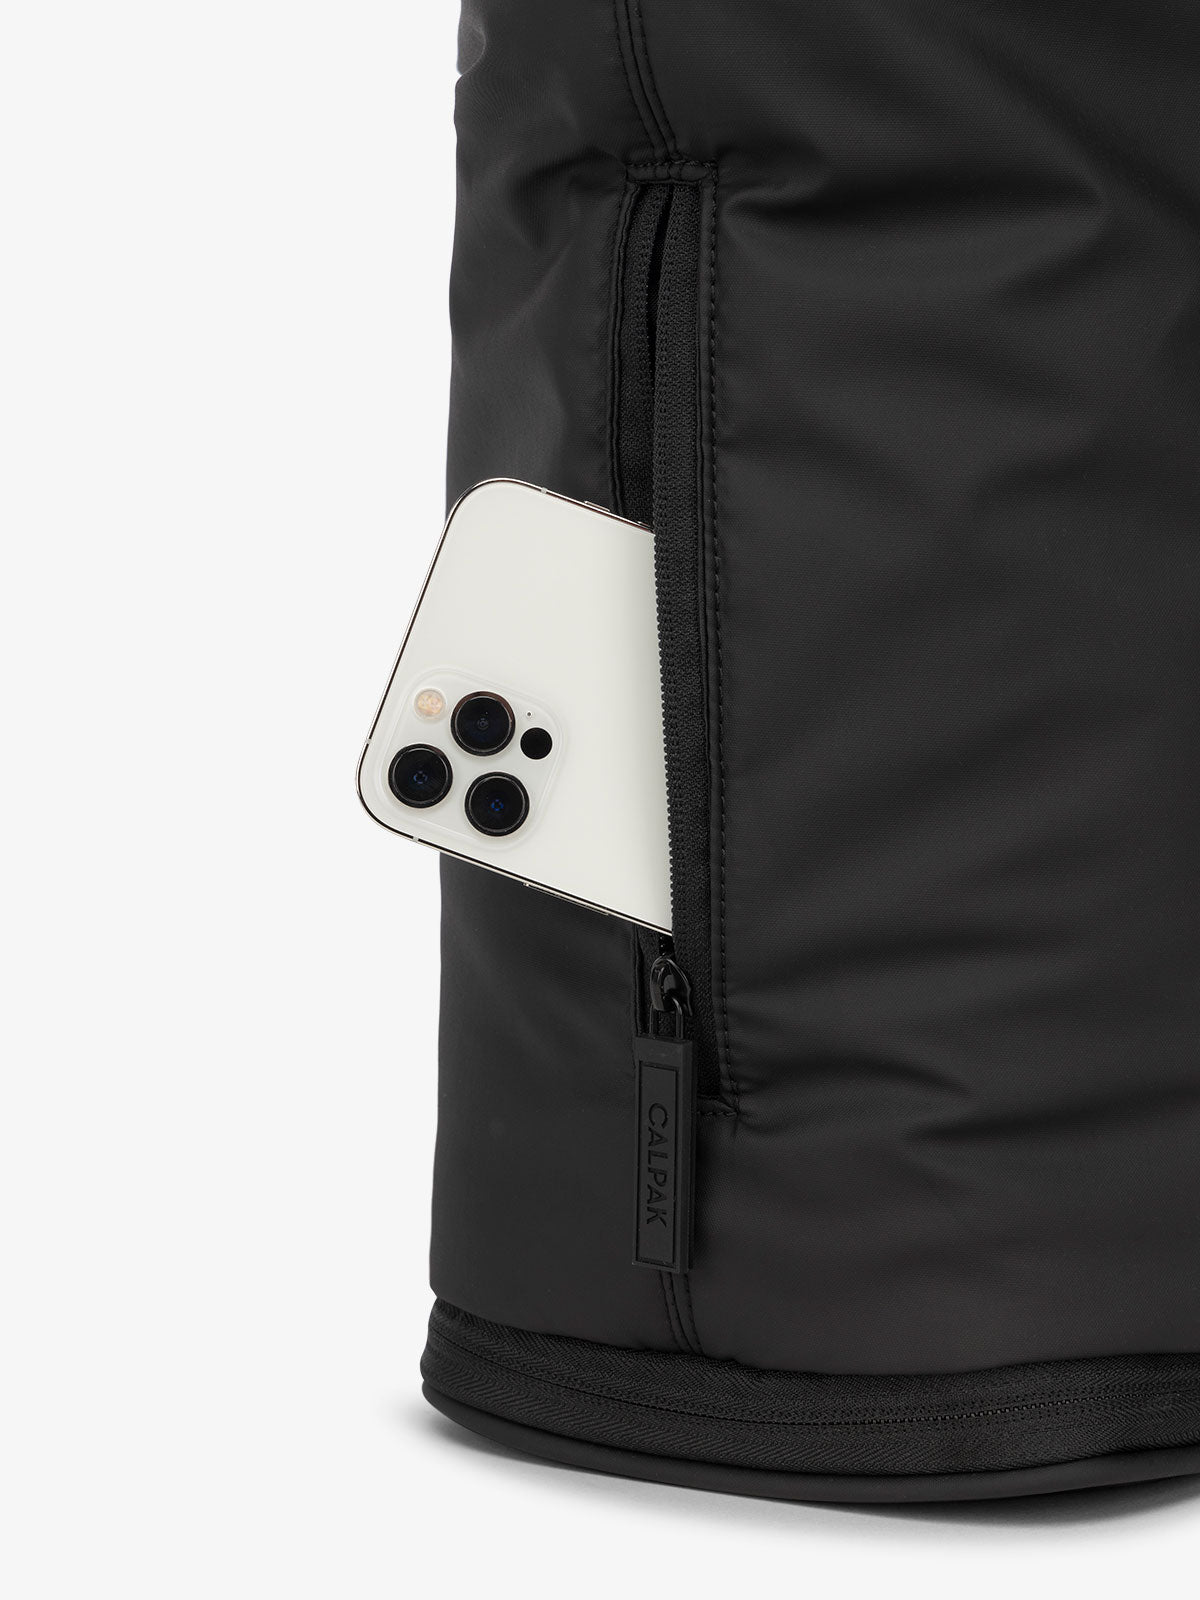 CALPAK Luka expandable laptop bag with zippered pocket in black